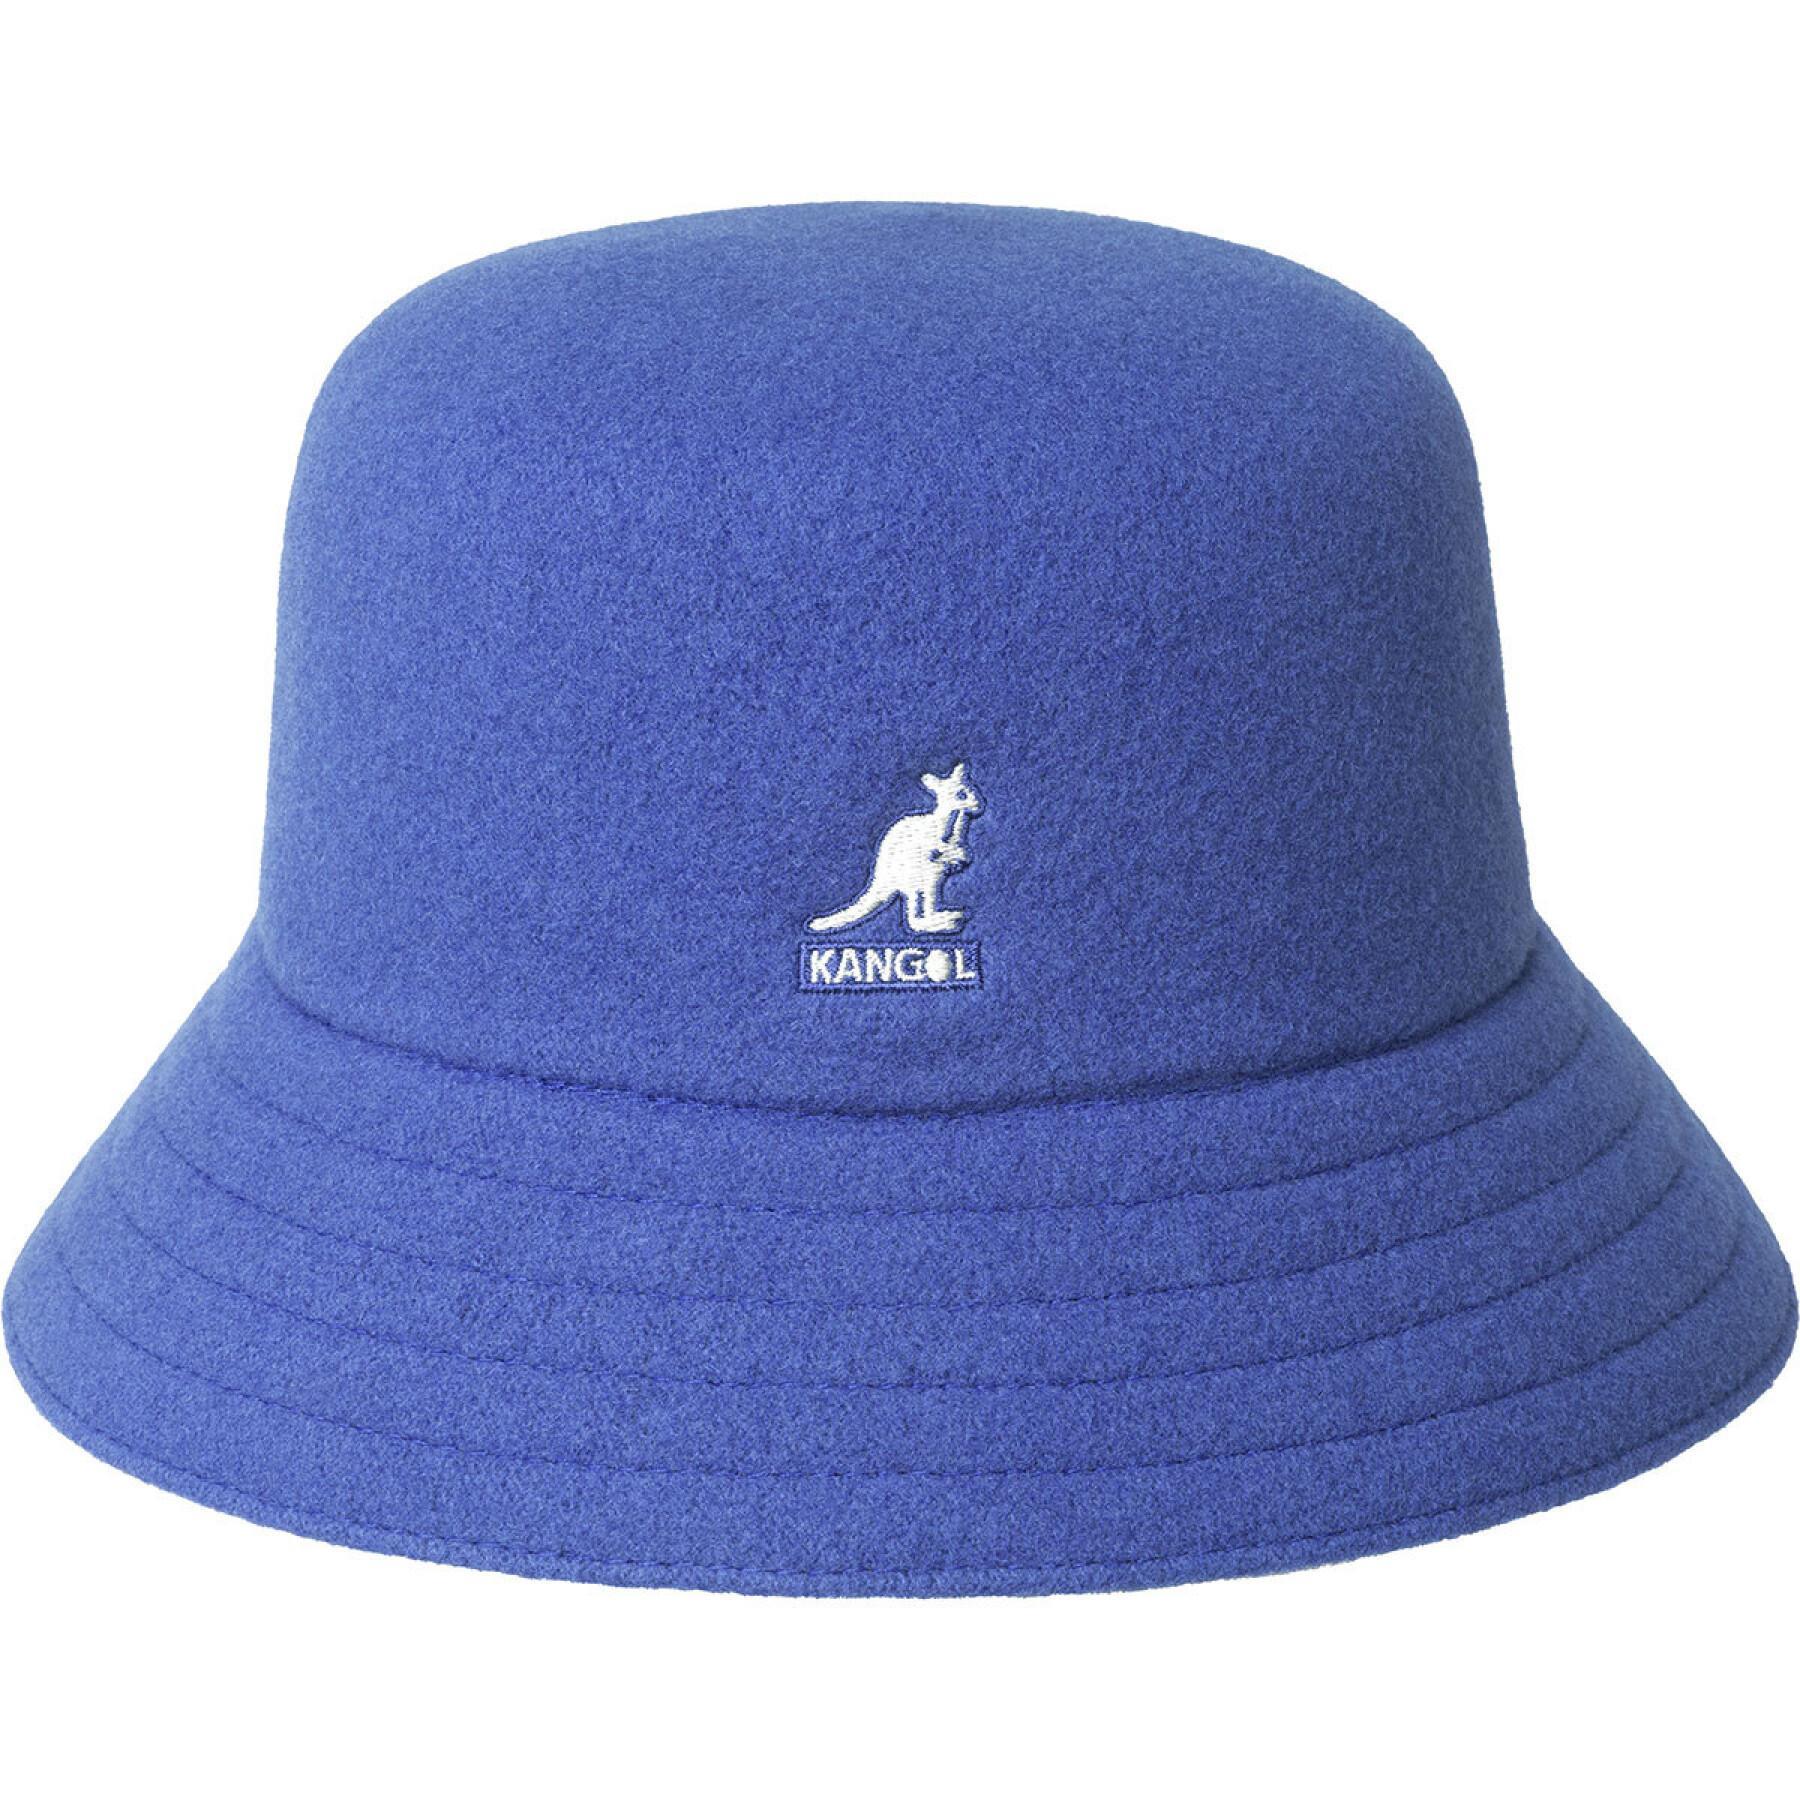 Kangol wool lahinch bucket hat